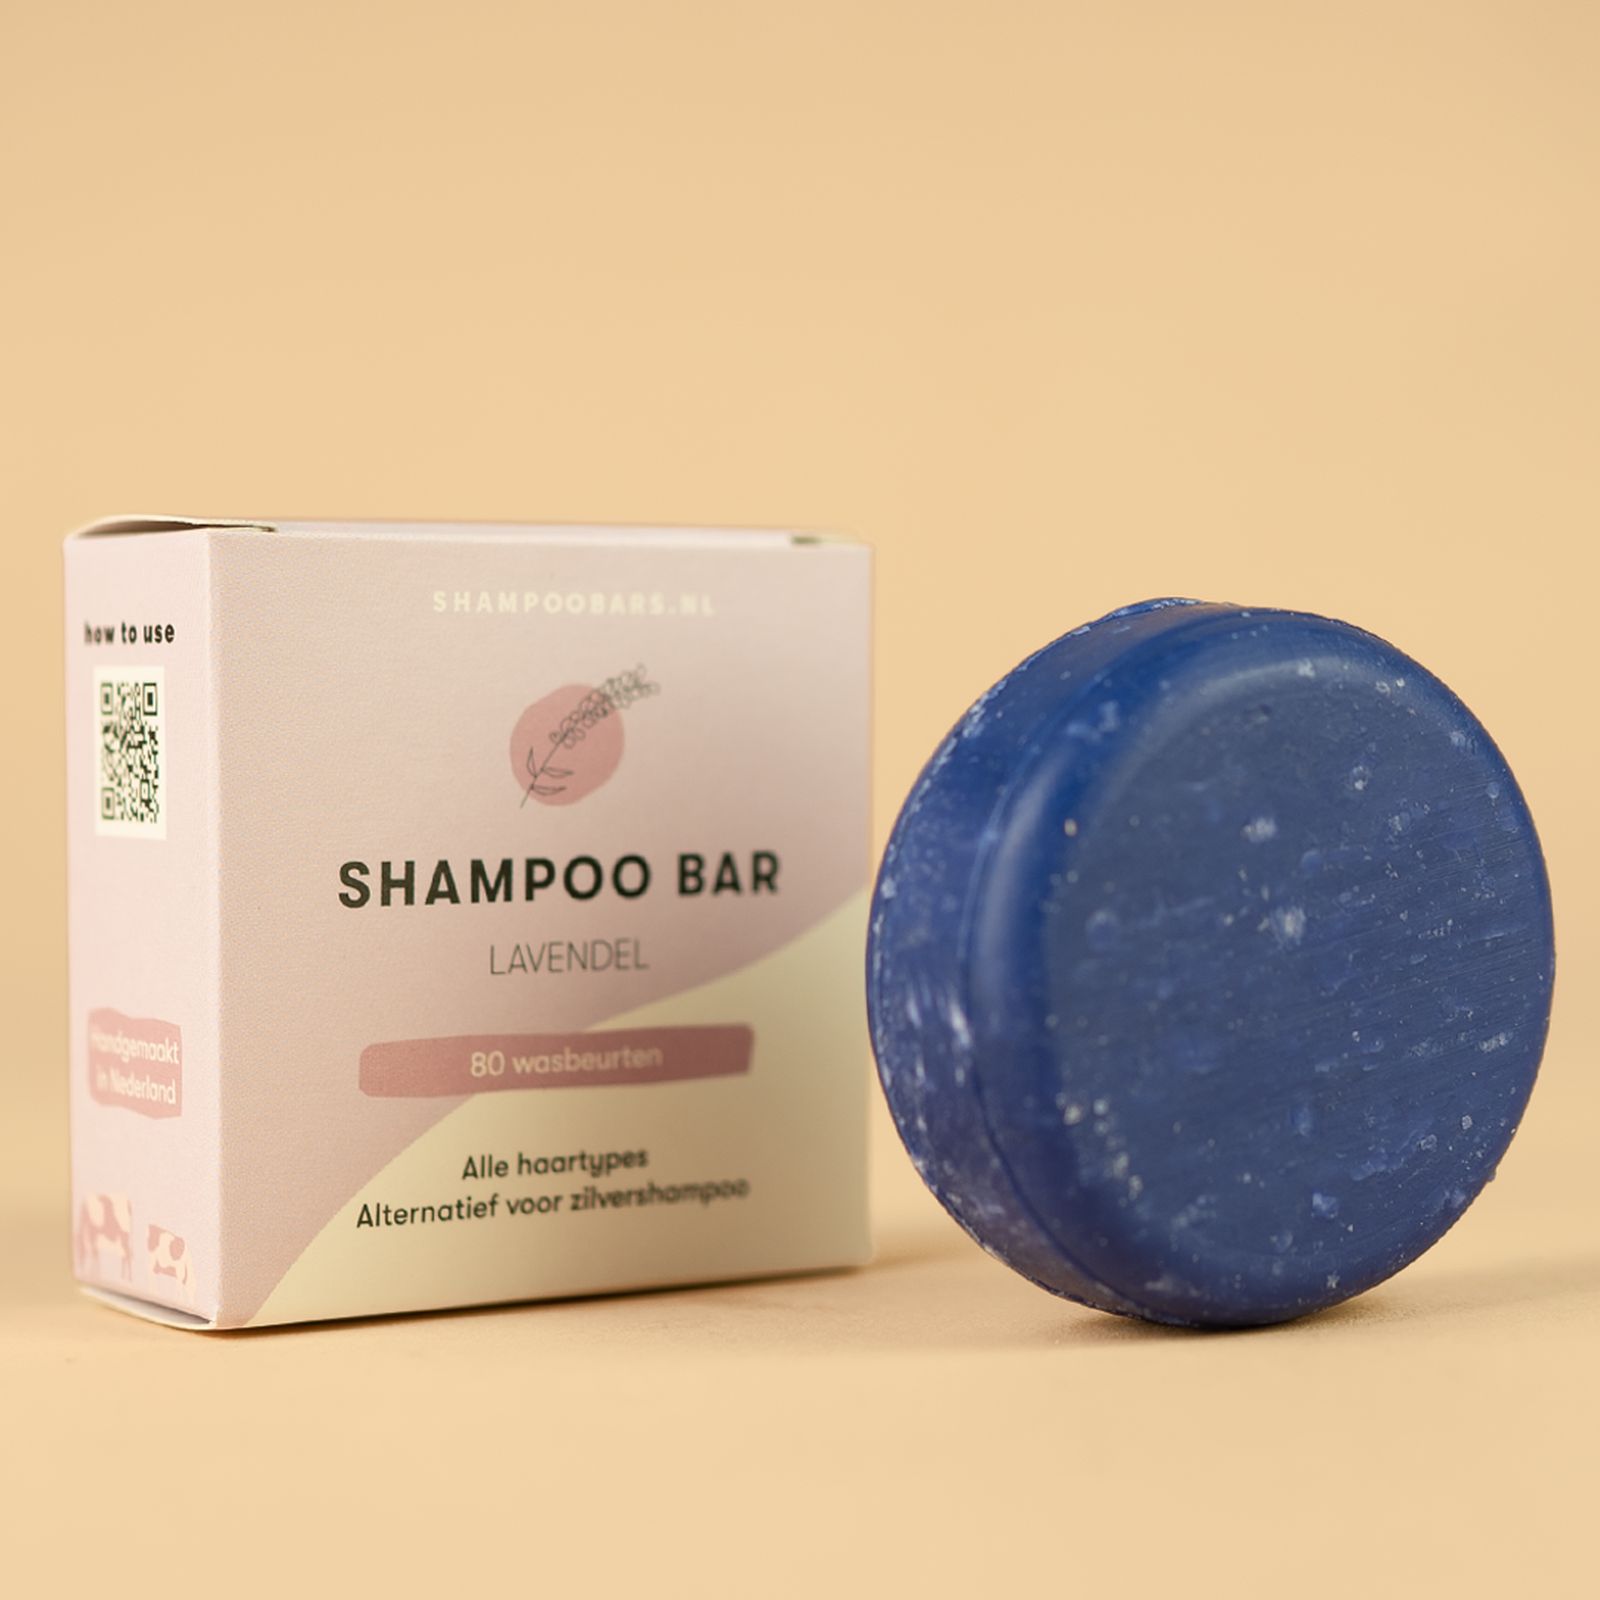 022-shampoo-bar-lavendel-web.jpg